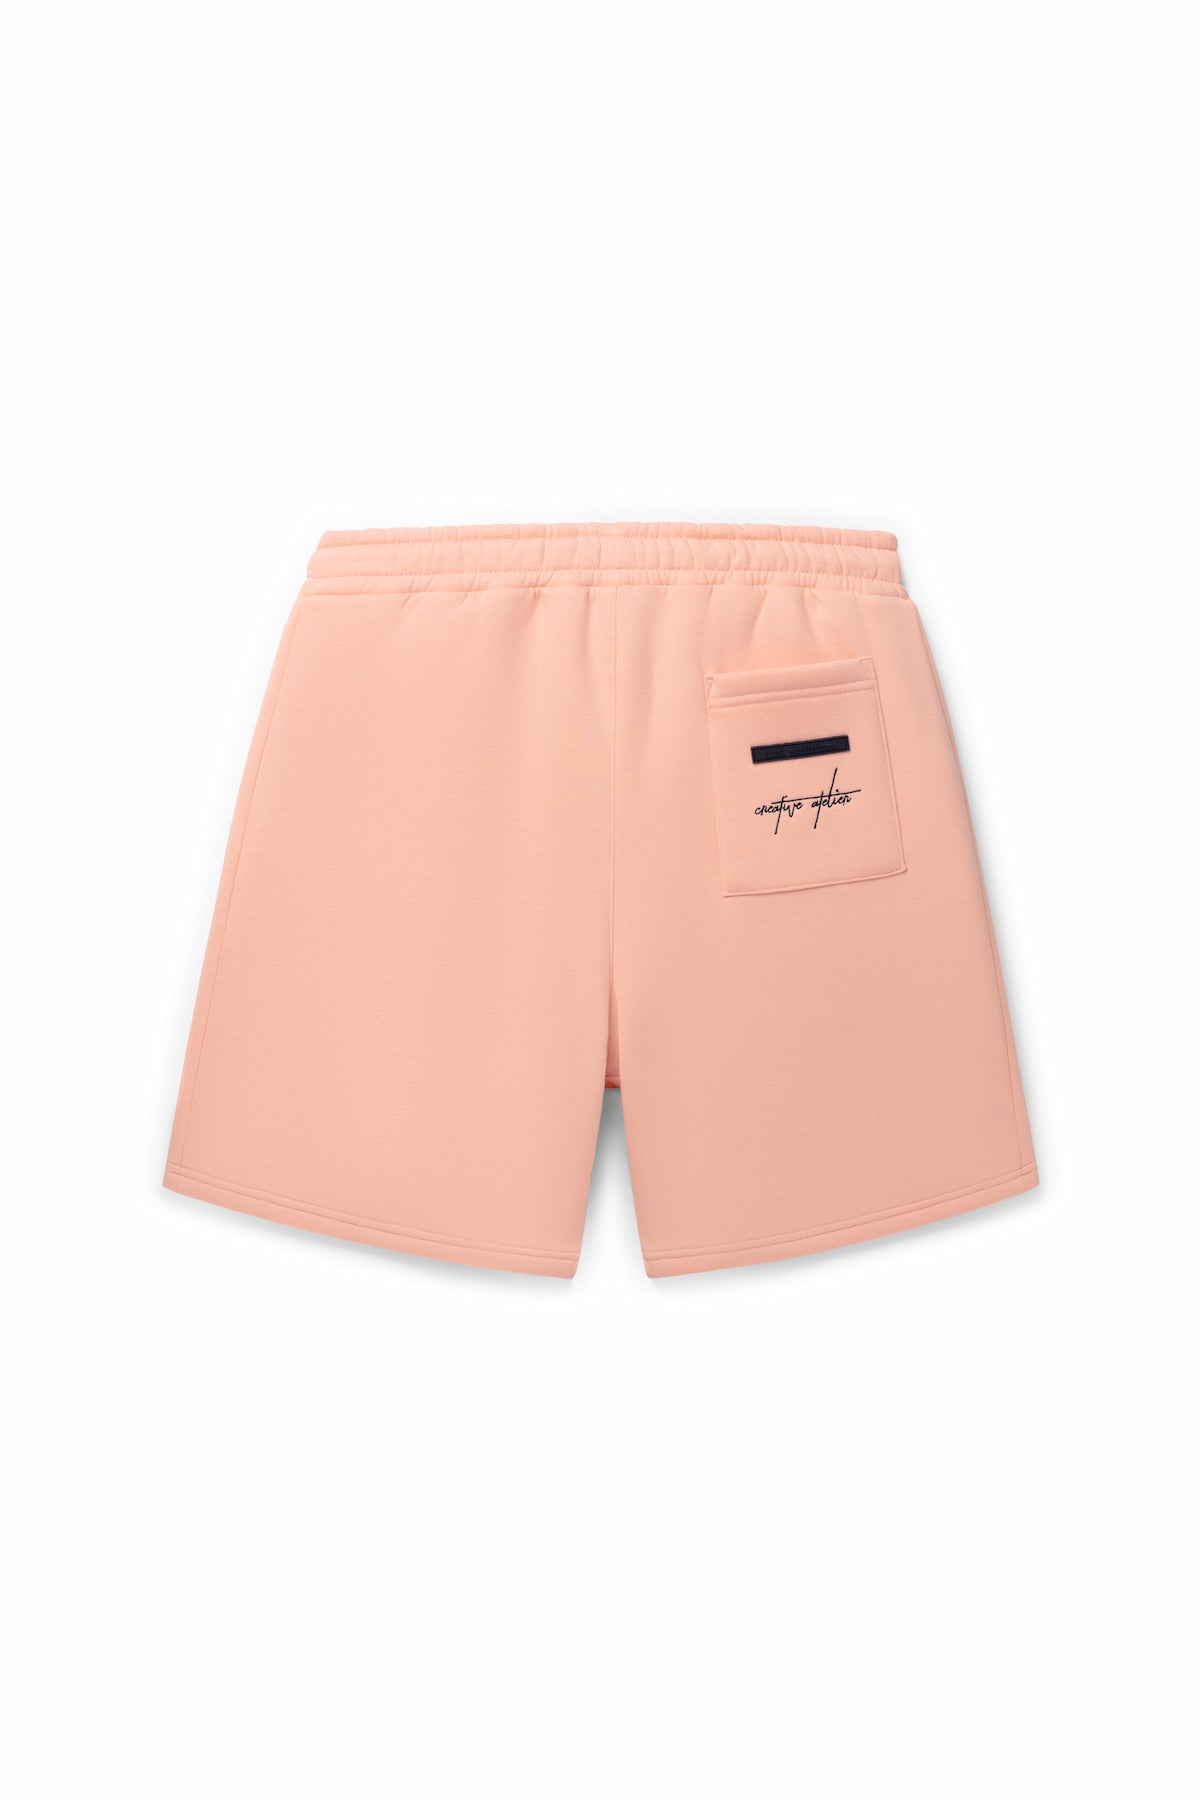 Seasonless Shorts - Light Pink